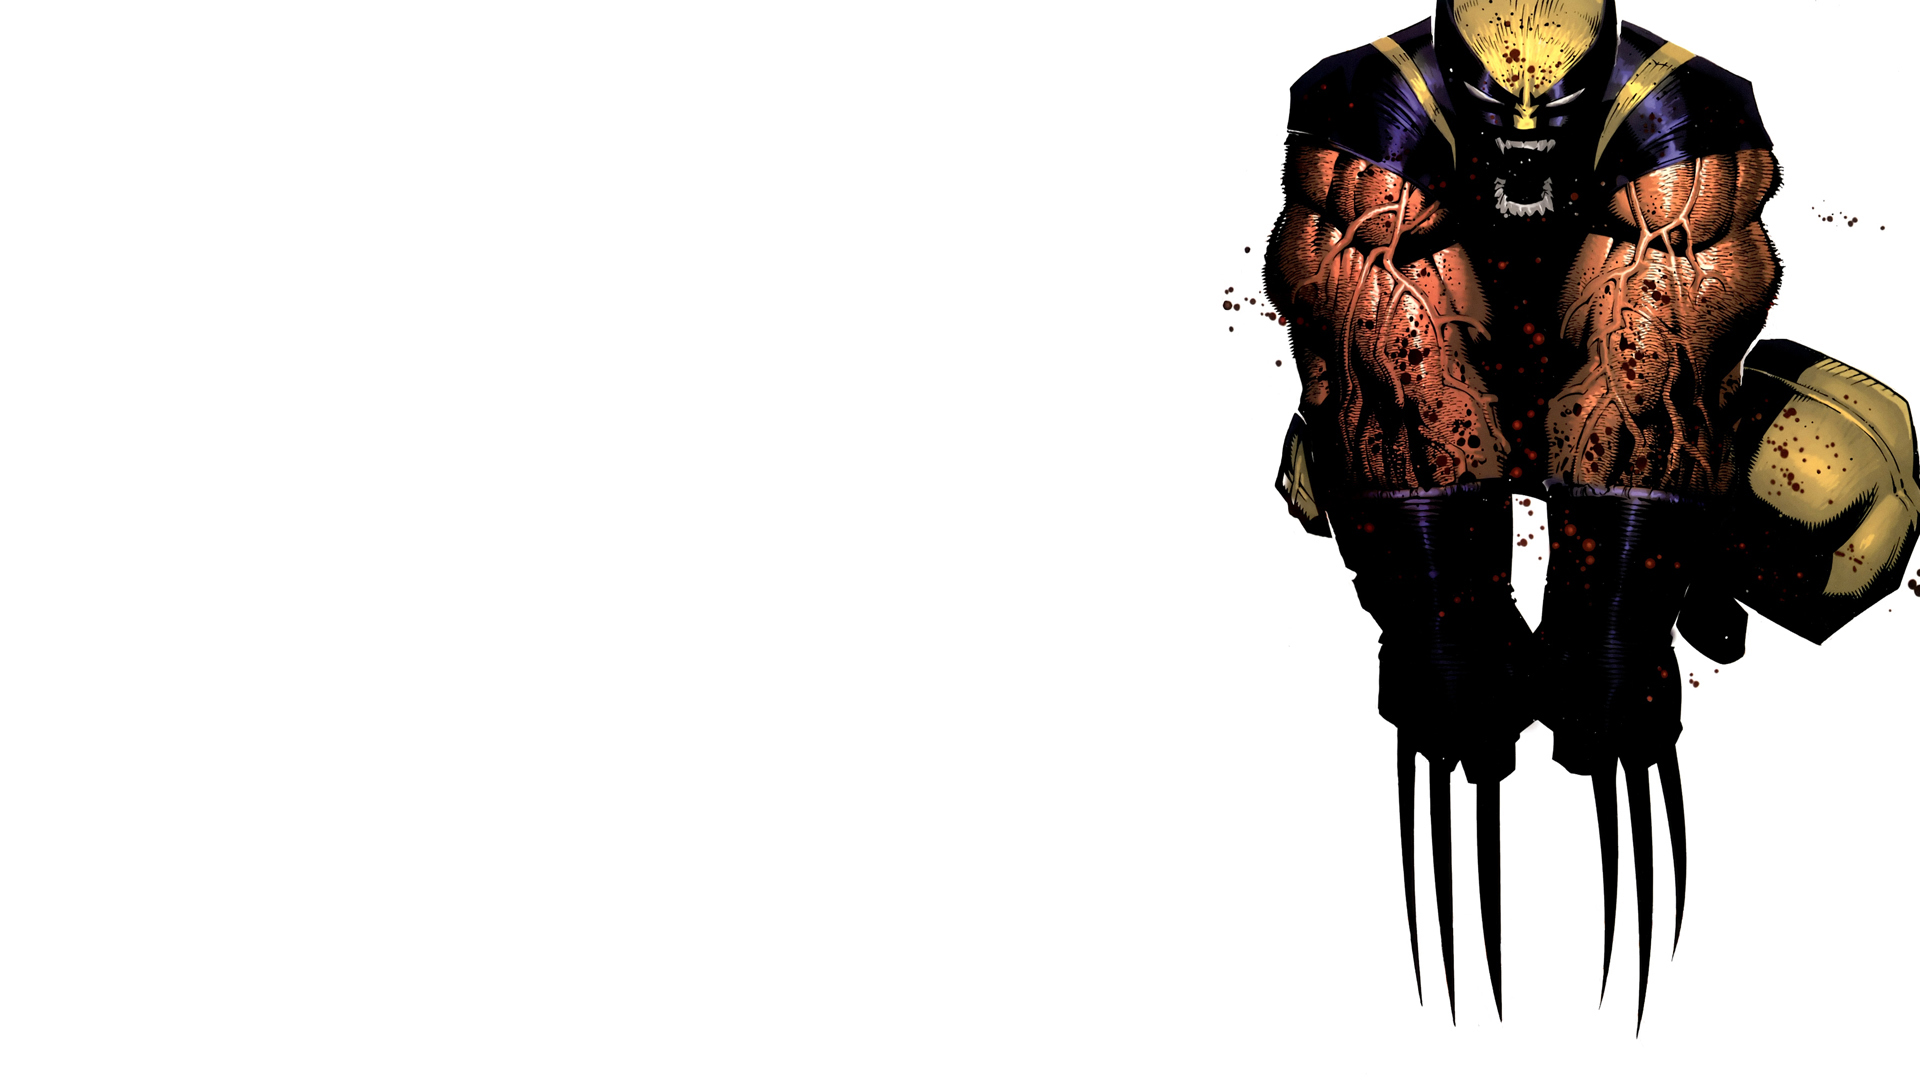 Wolverine, Marvel Comics, white background - desktop wallpaper